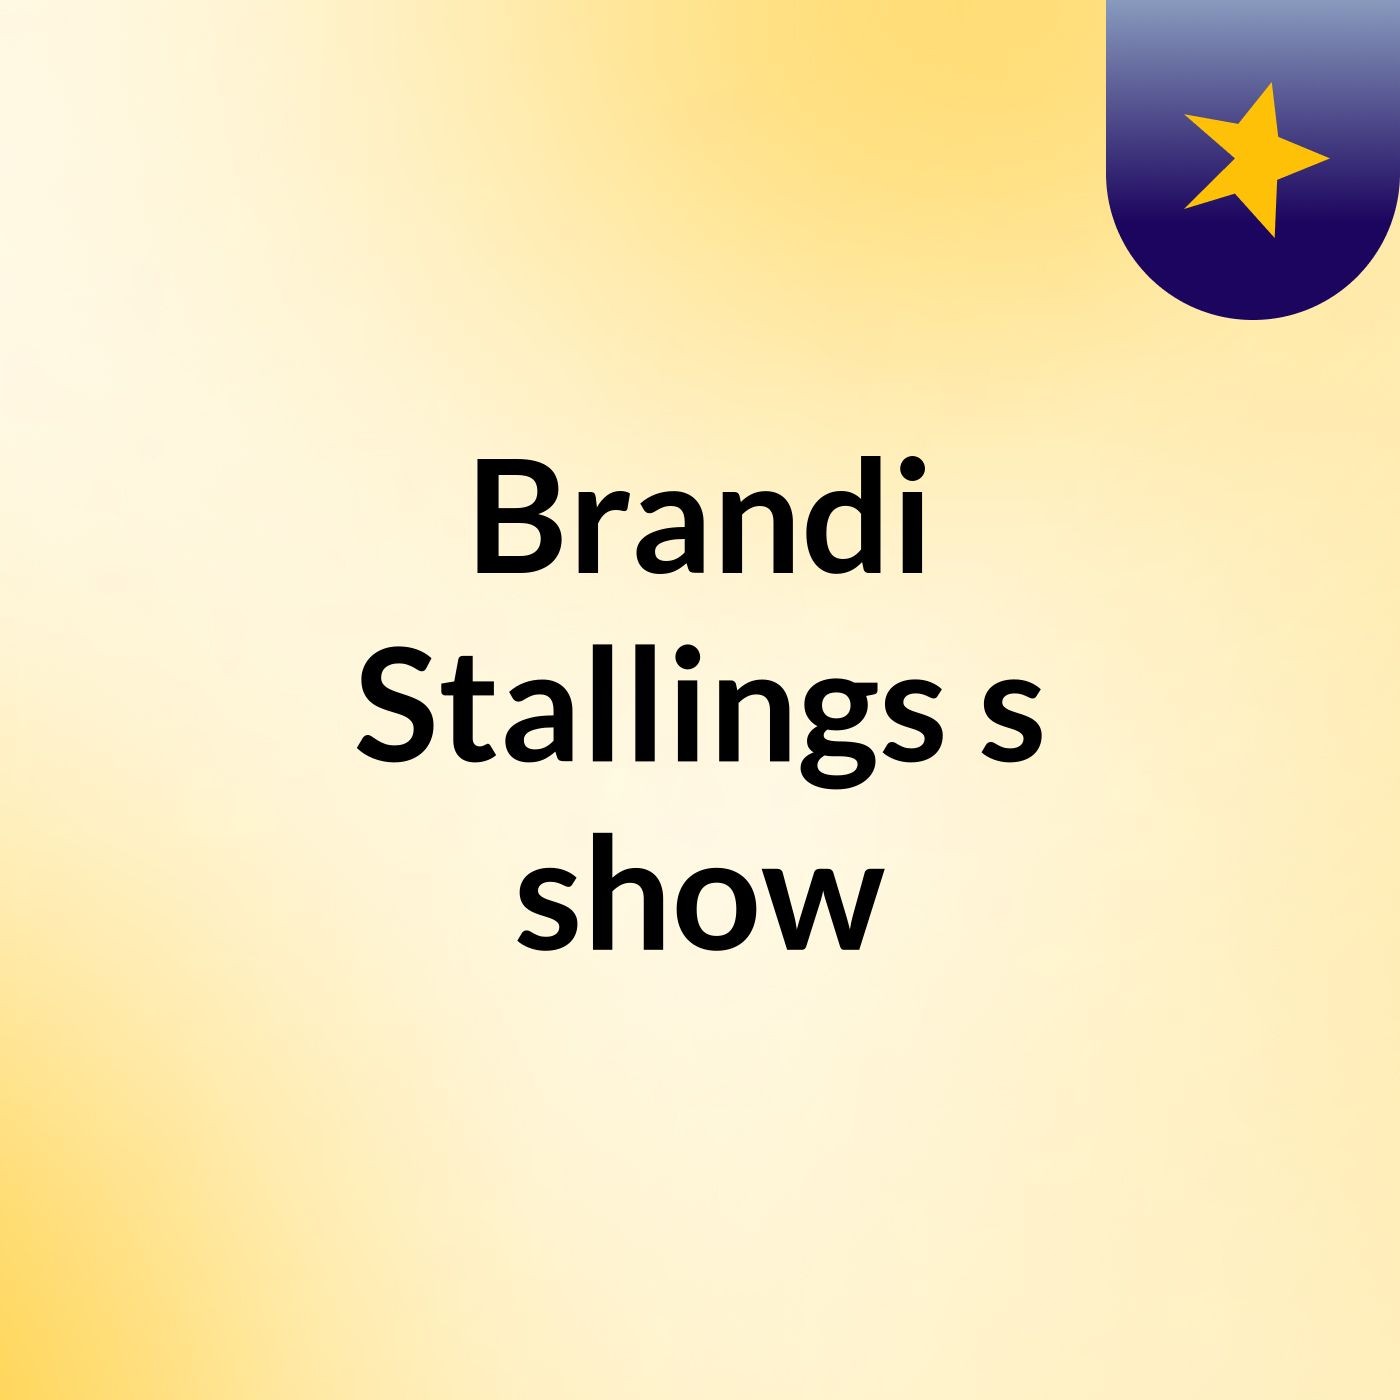 Brandi Stallings's show